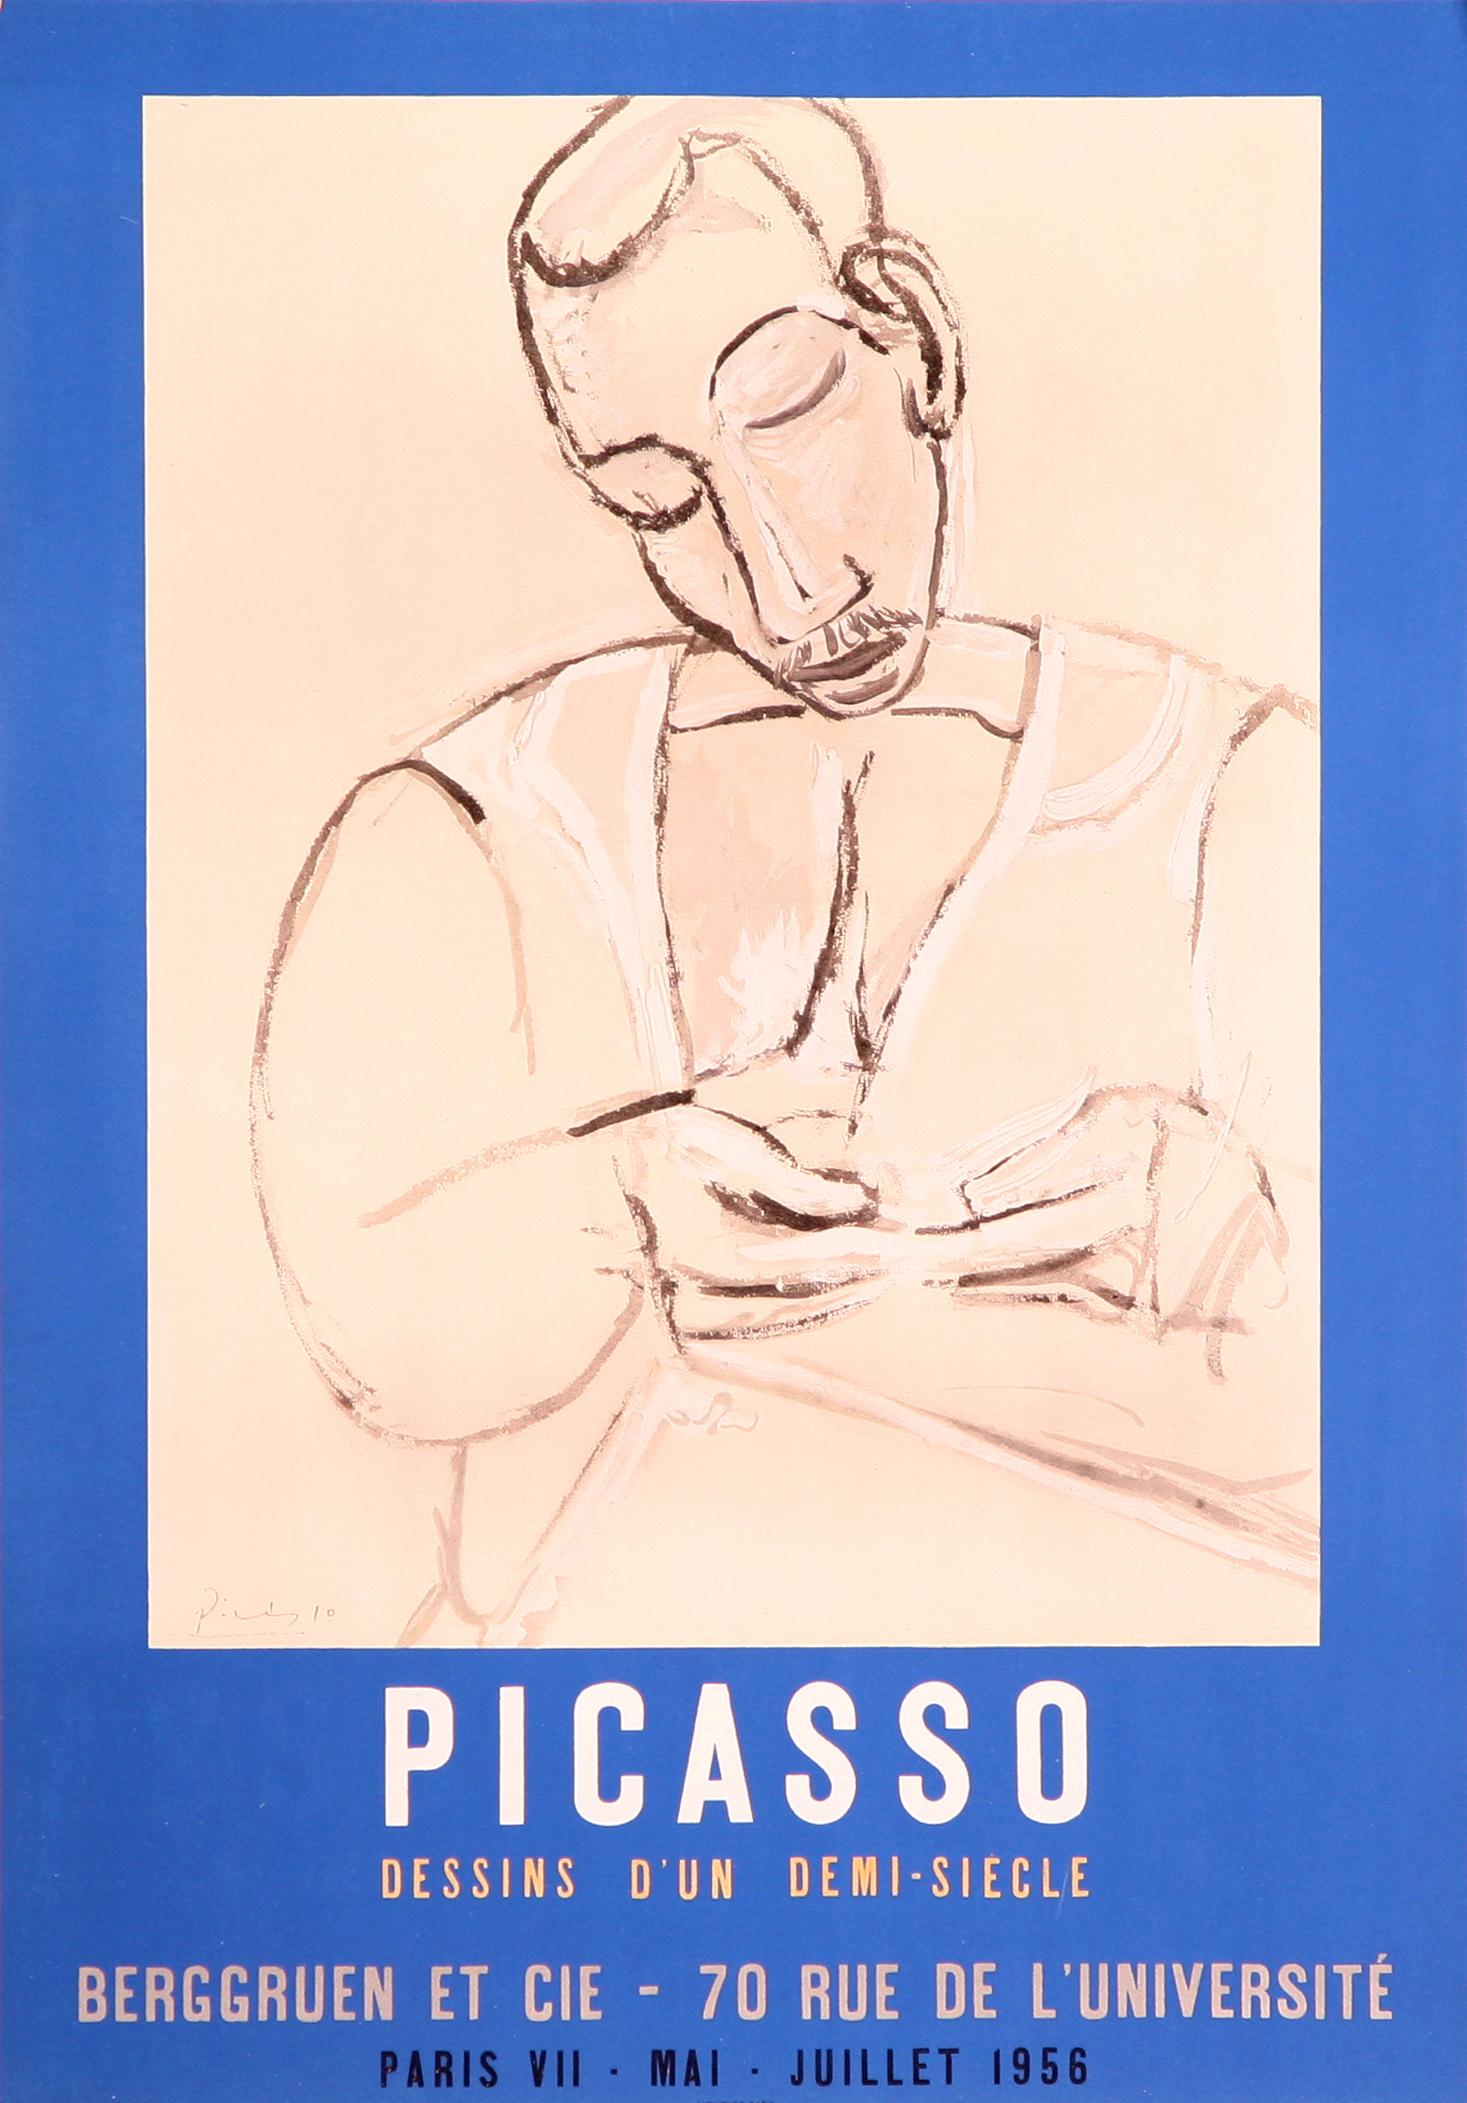 (after) Pablo Picasso Print - Dessins d'un Demi-Siecle - Berggruen and CIE (after) Picasso, 1956